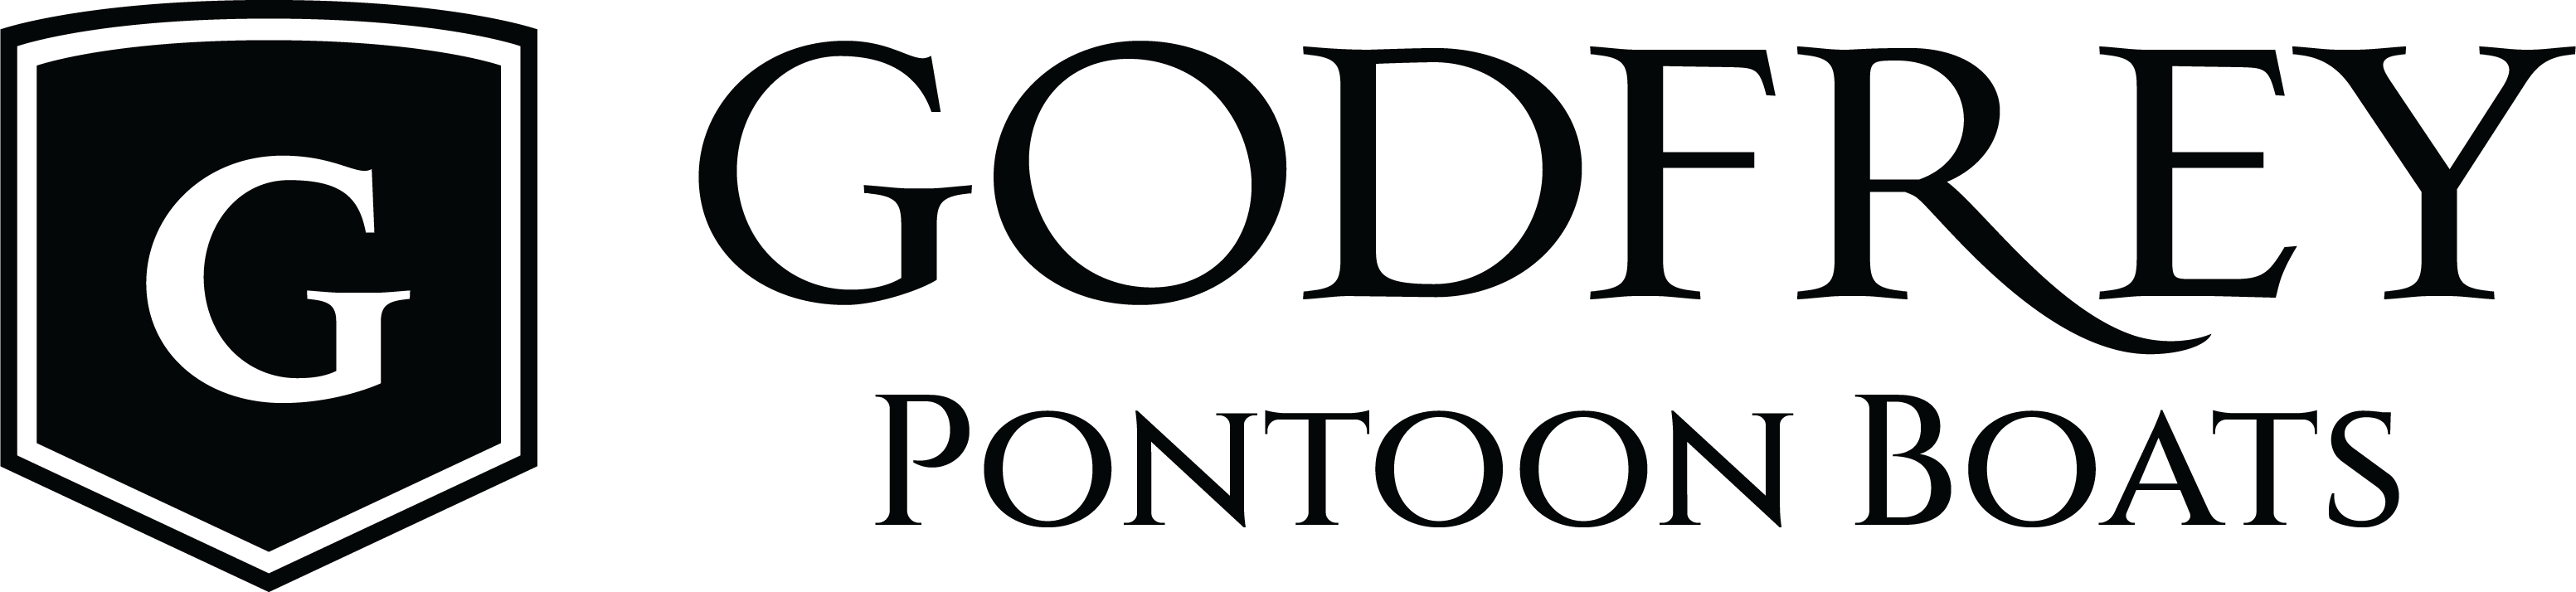 Godfrey_Pontoon_Boats_Horz_Logo_Black